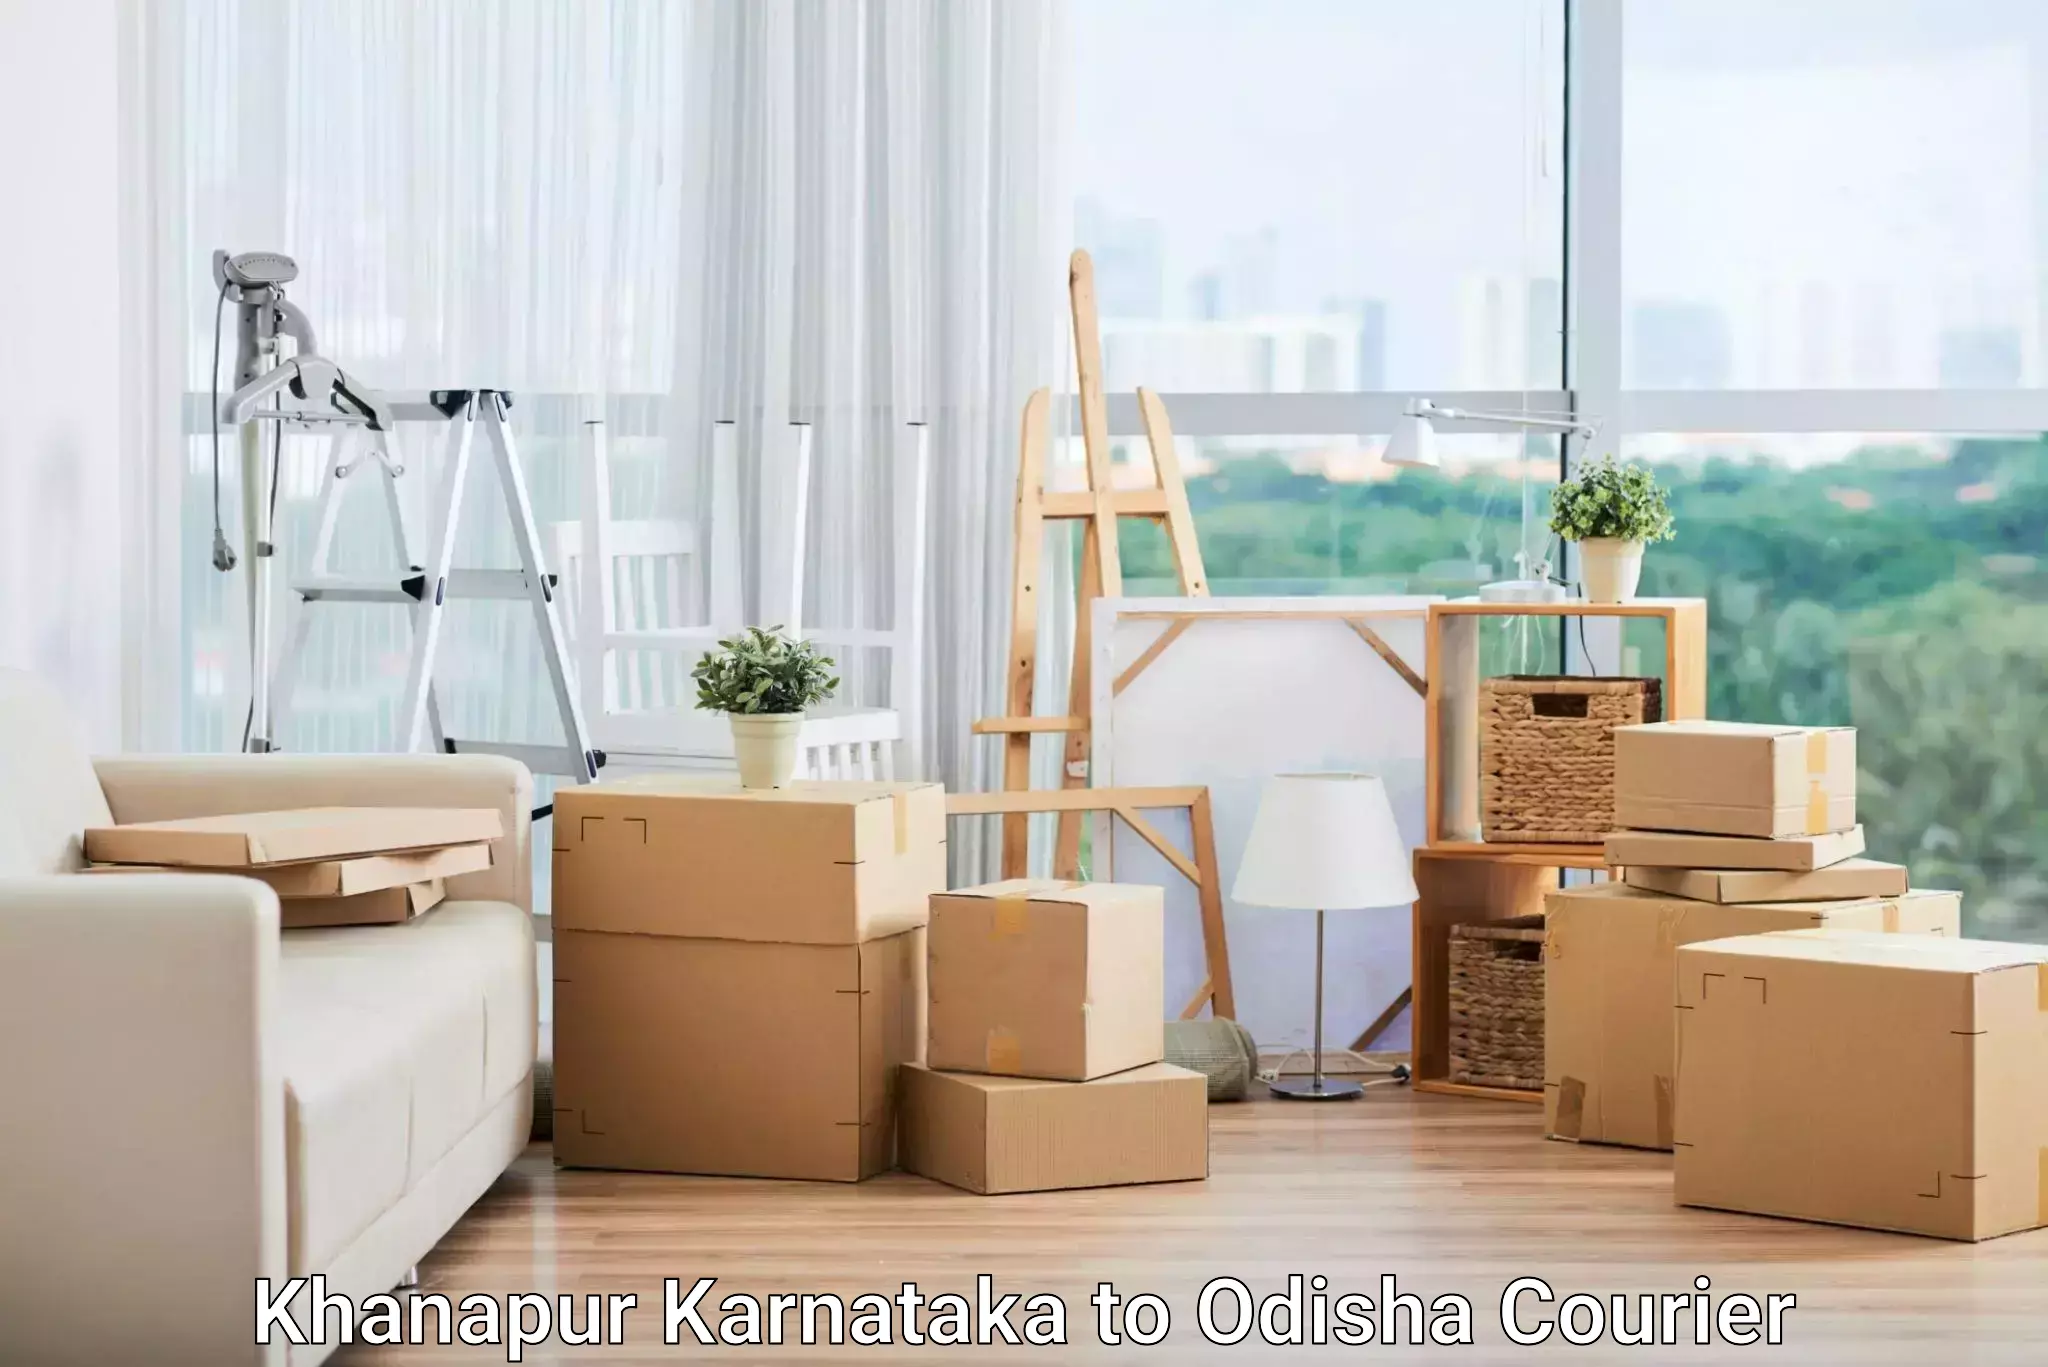 State-of-the-art courier technology Khanapur Karnataka to Badamba